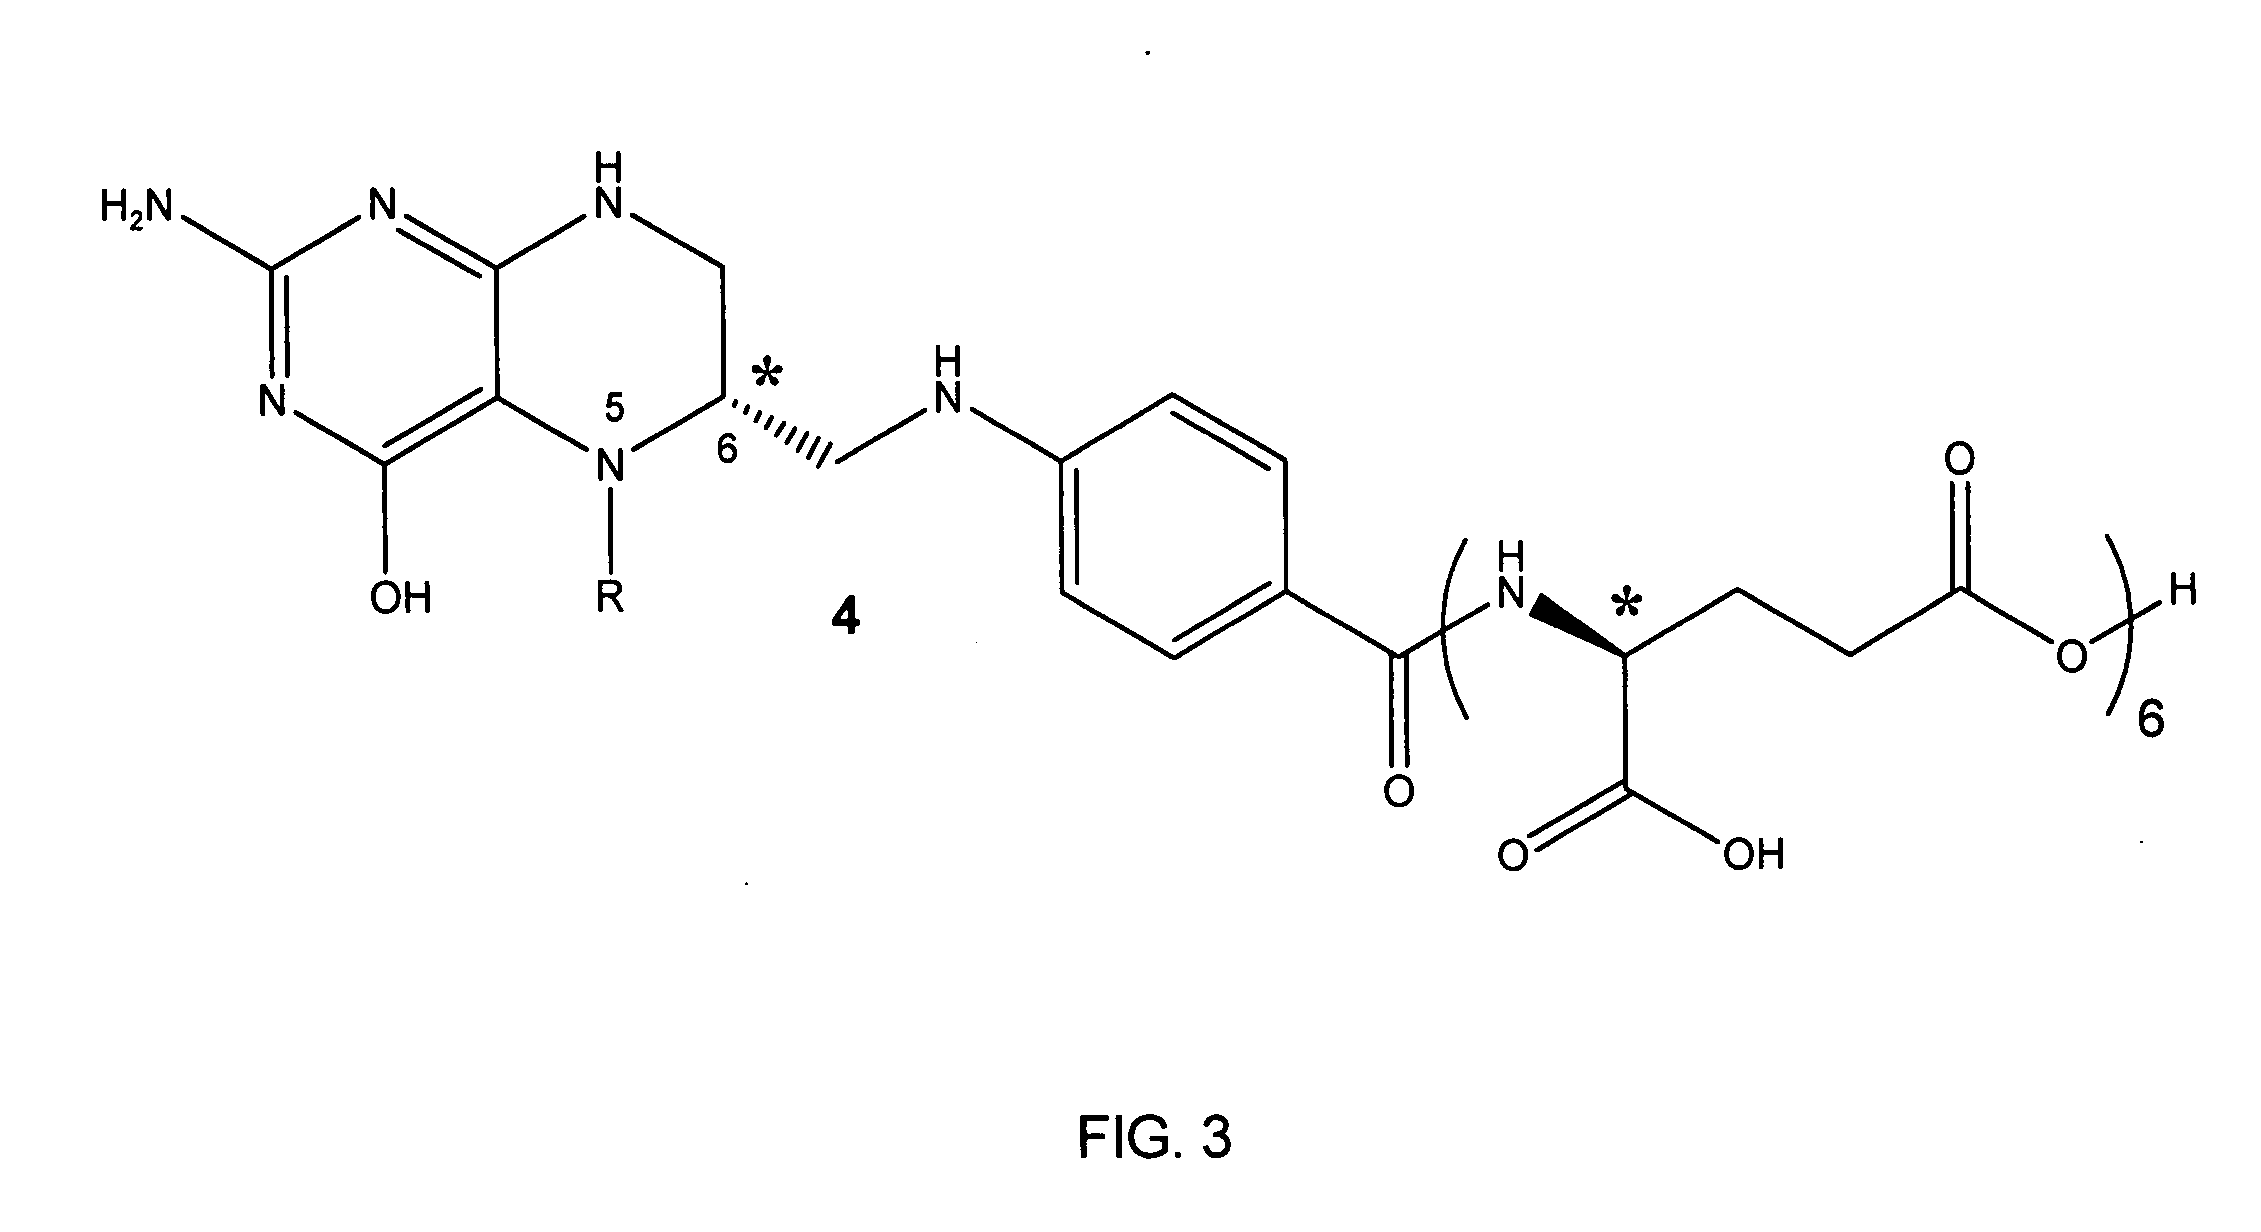 Synthesis of (6S)-5-methyl-5,6,7,8-tetrahydrofolic acid